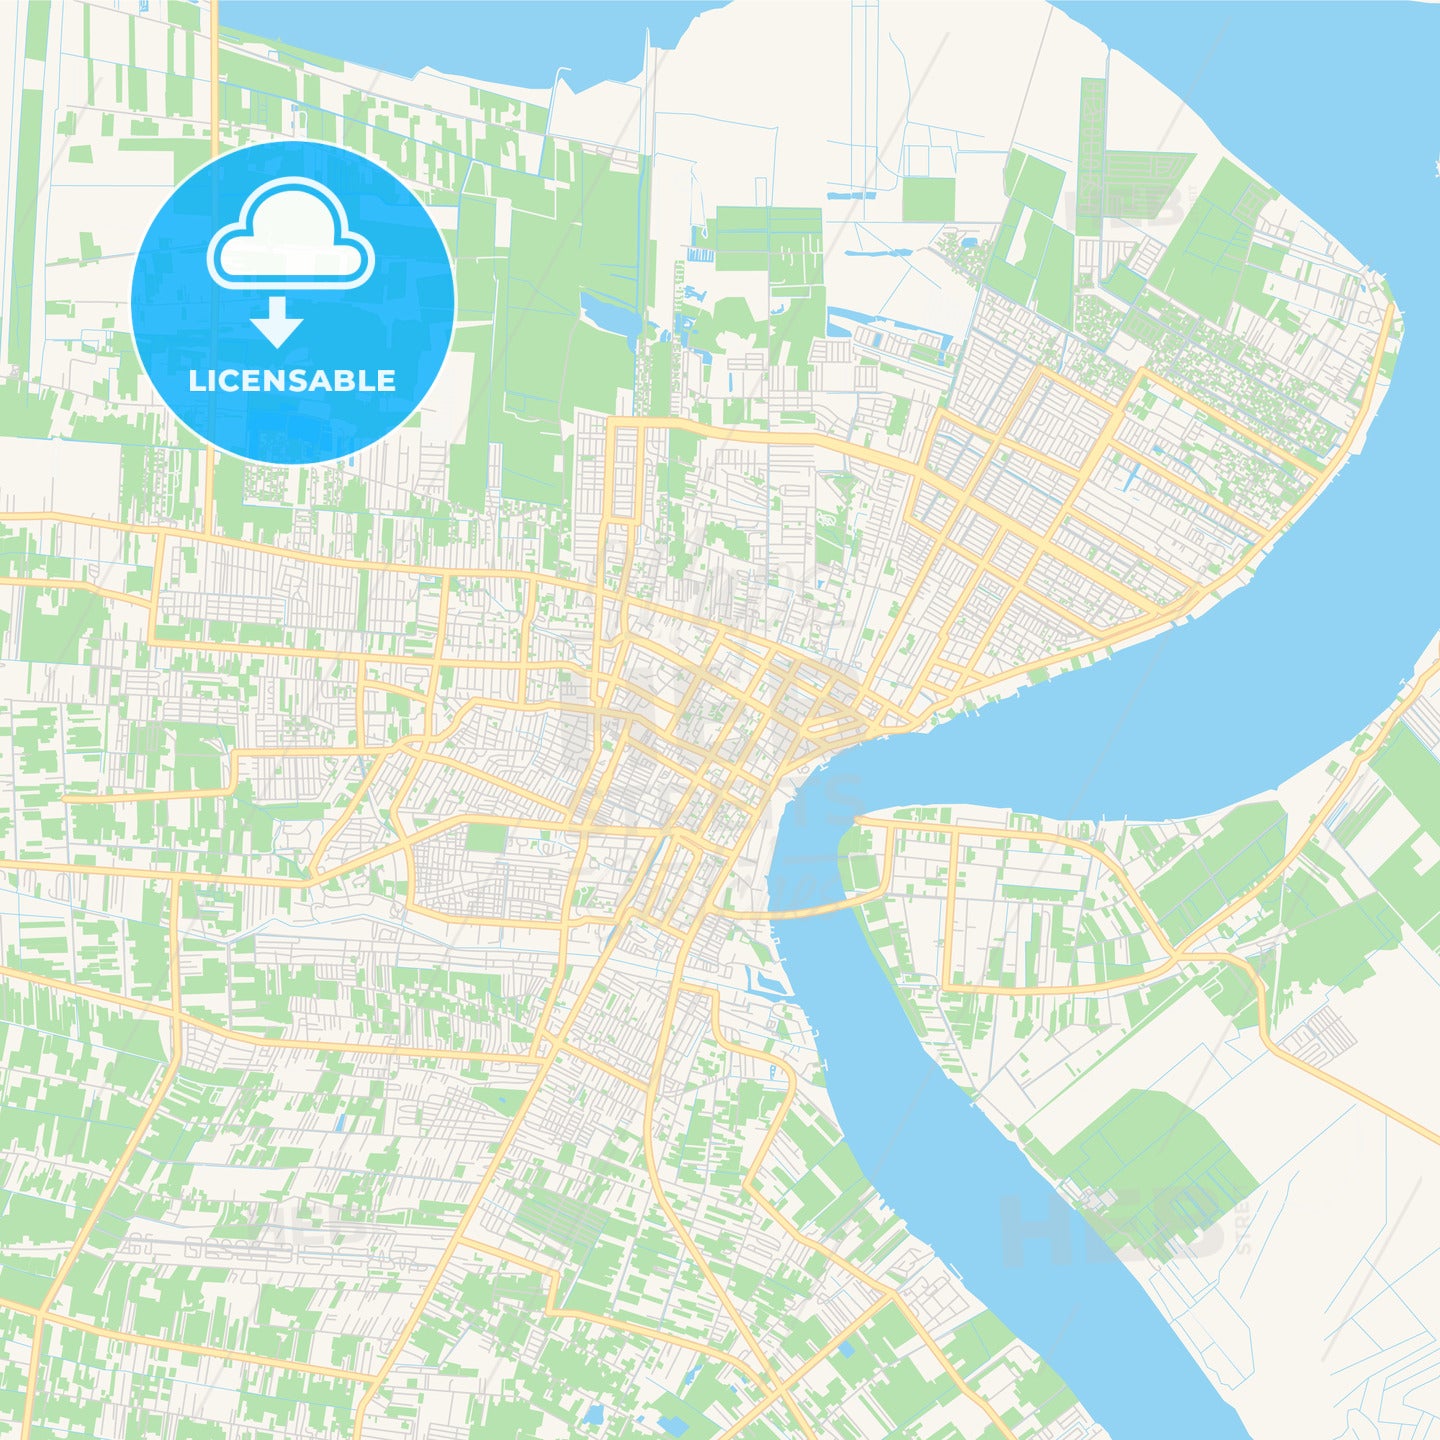 Printable street map of Paramaribo, Suriname